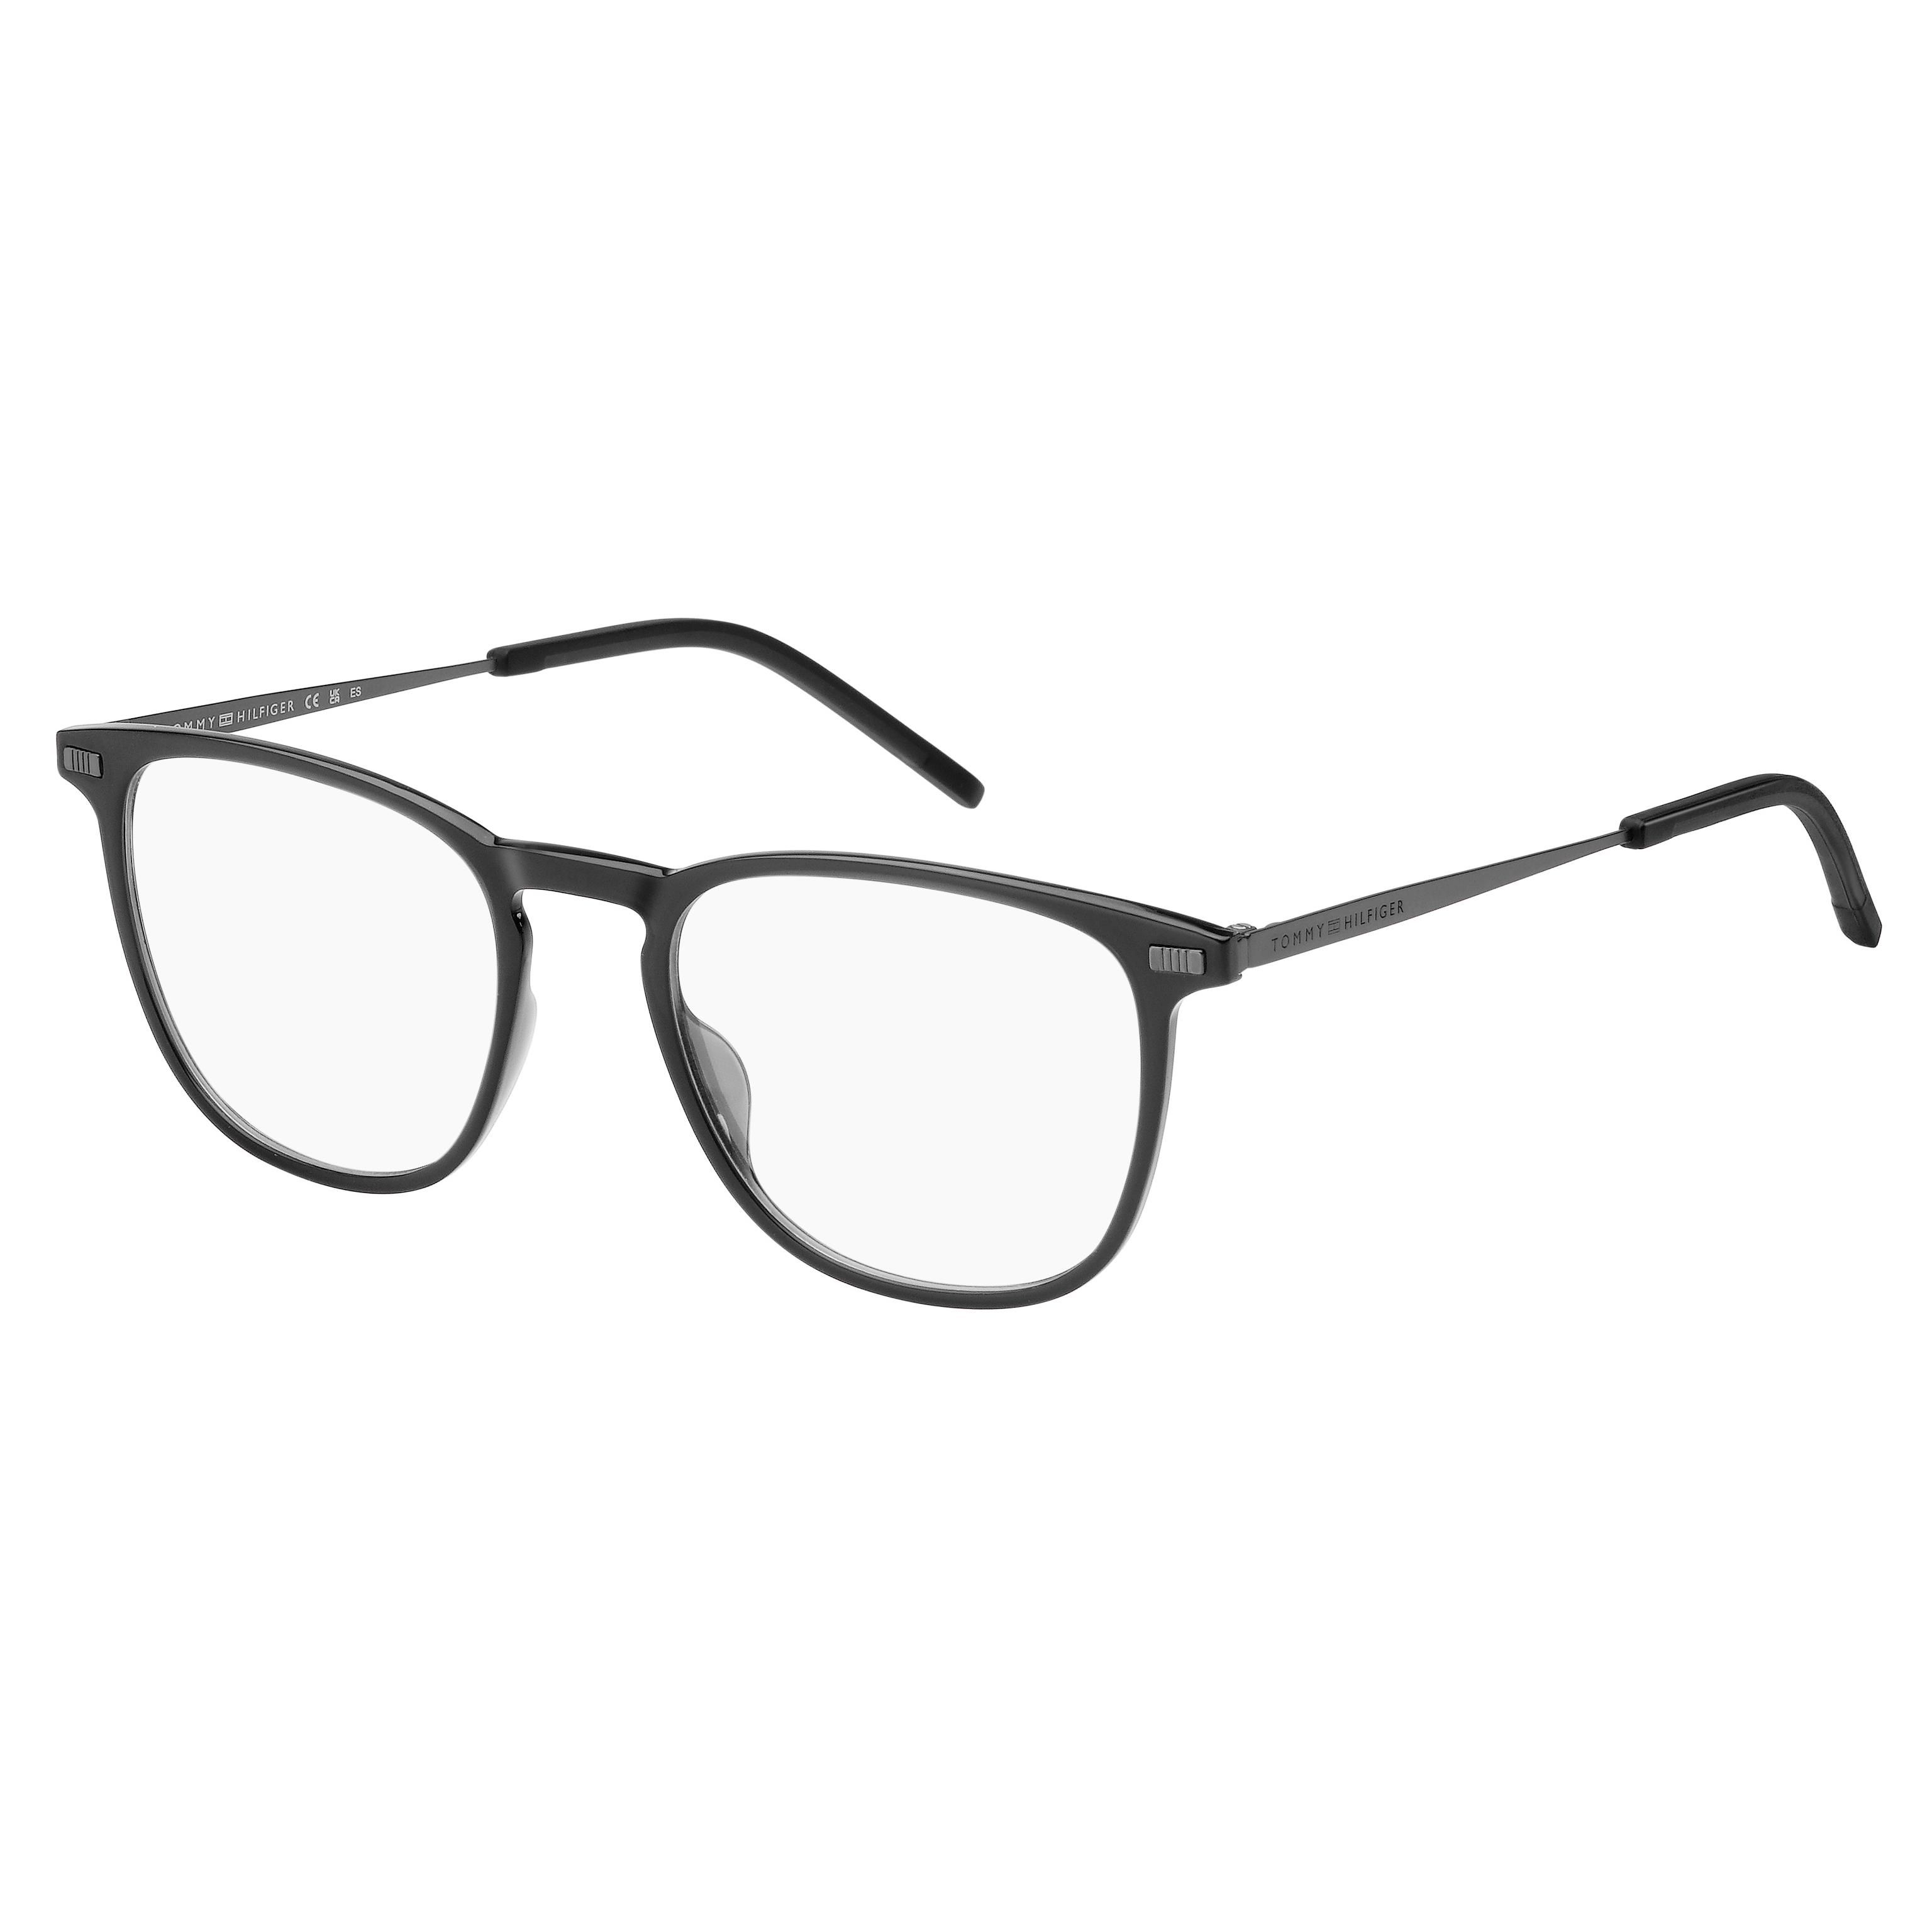 TH 2038 Square Eyeglasses KB7 - size 52